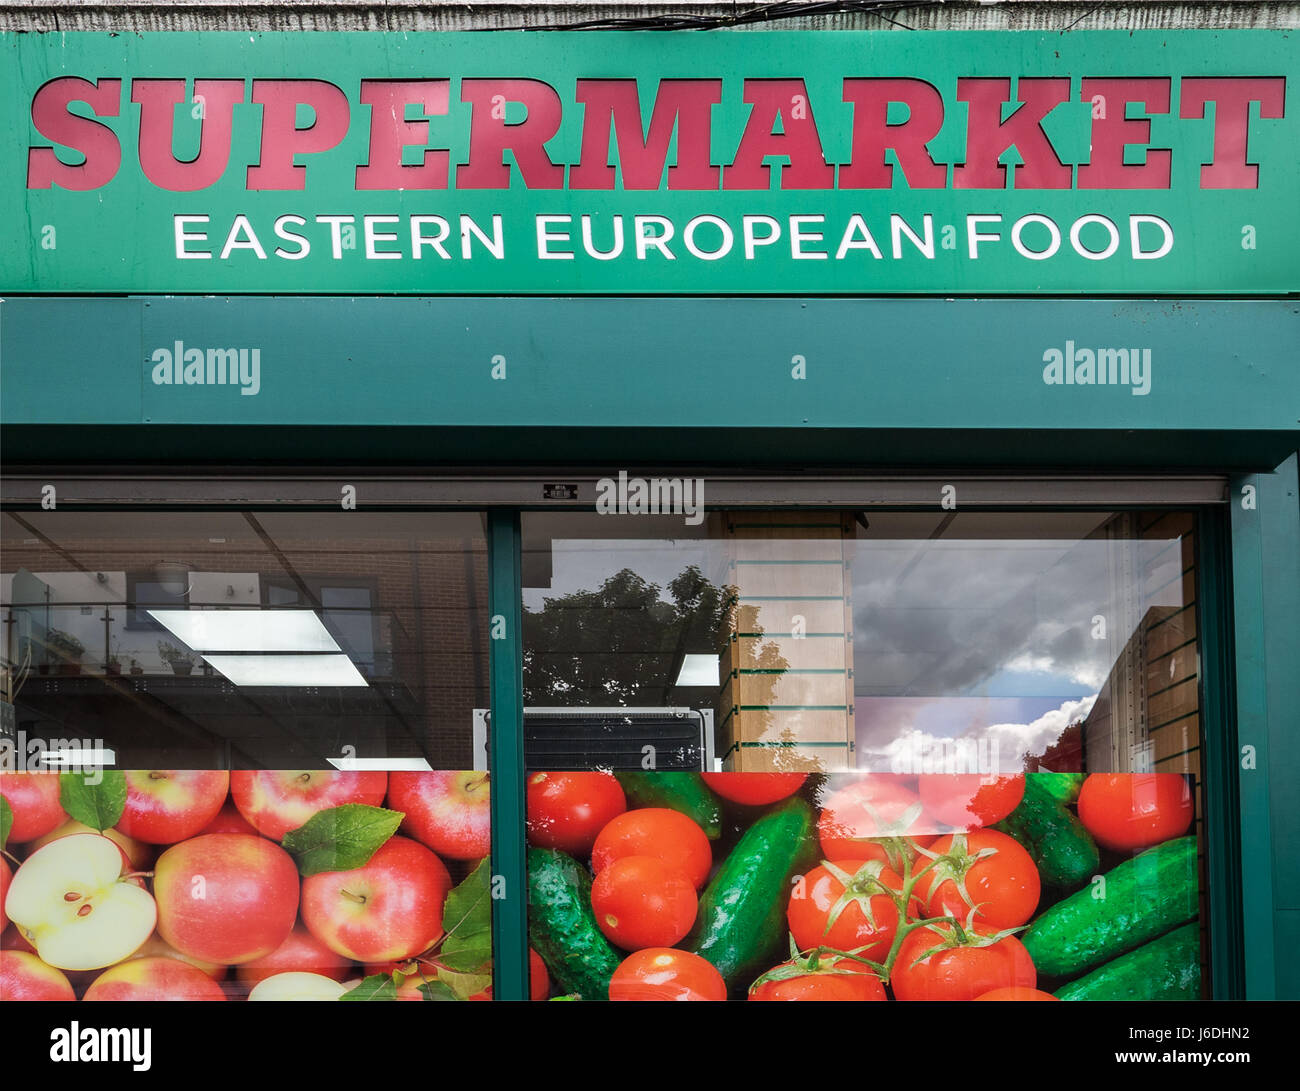 Eastern European Food supermarket in south east London, U.K. Stock Photo